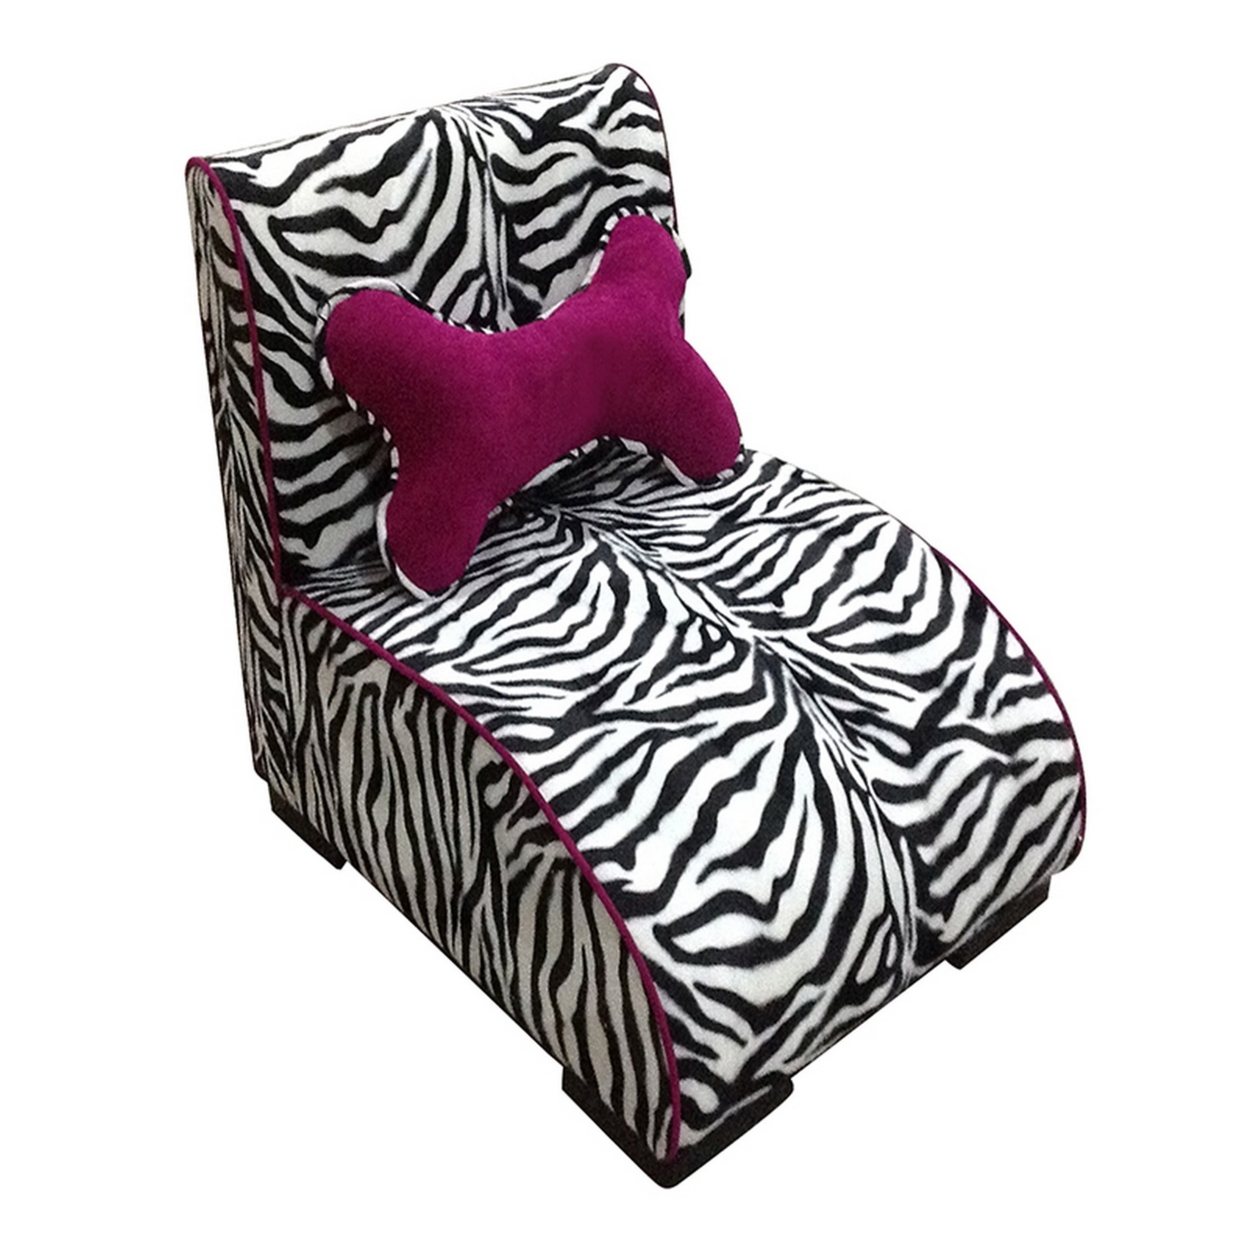 Pet Furniture With Zebra Print Fabric And Block Feet, Black And White- Saltoro Sherpi